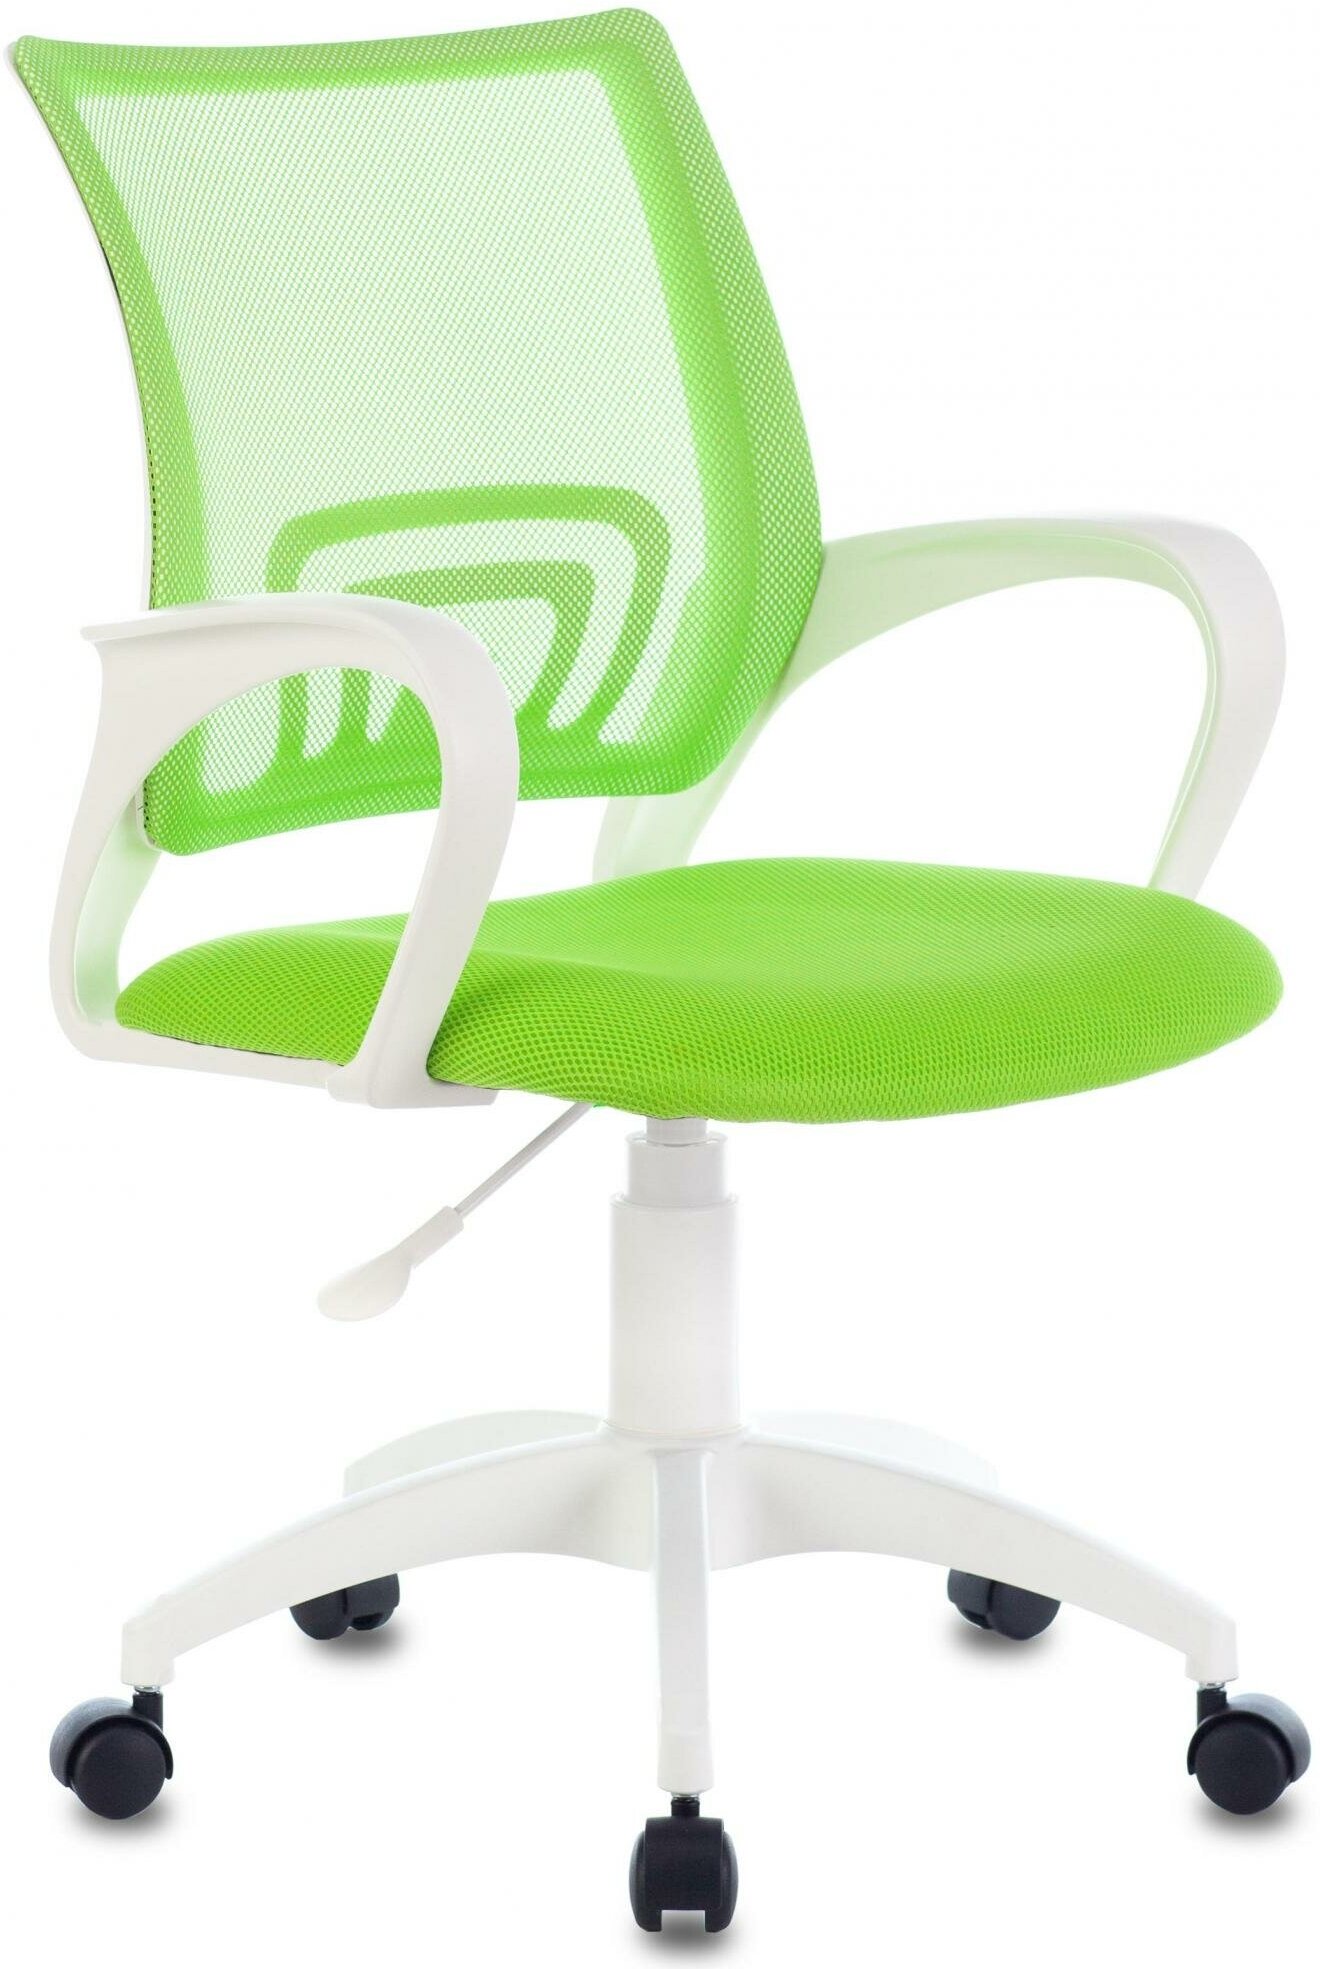 Офисное кресло Бюрократ CH-W695NLT/SD/TW-18 (Green/White)